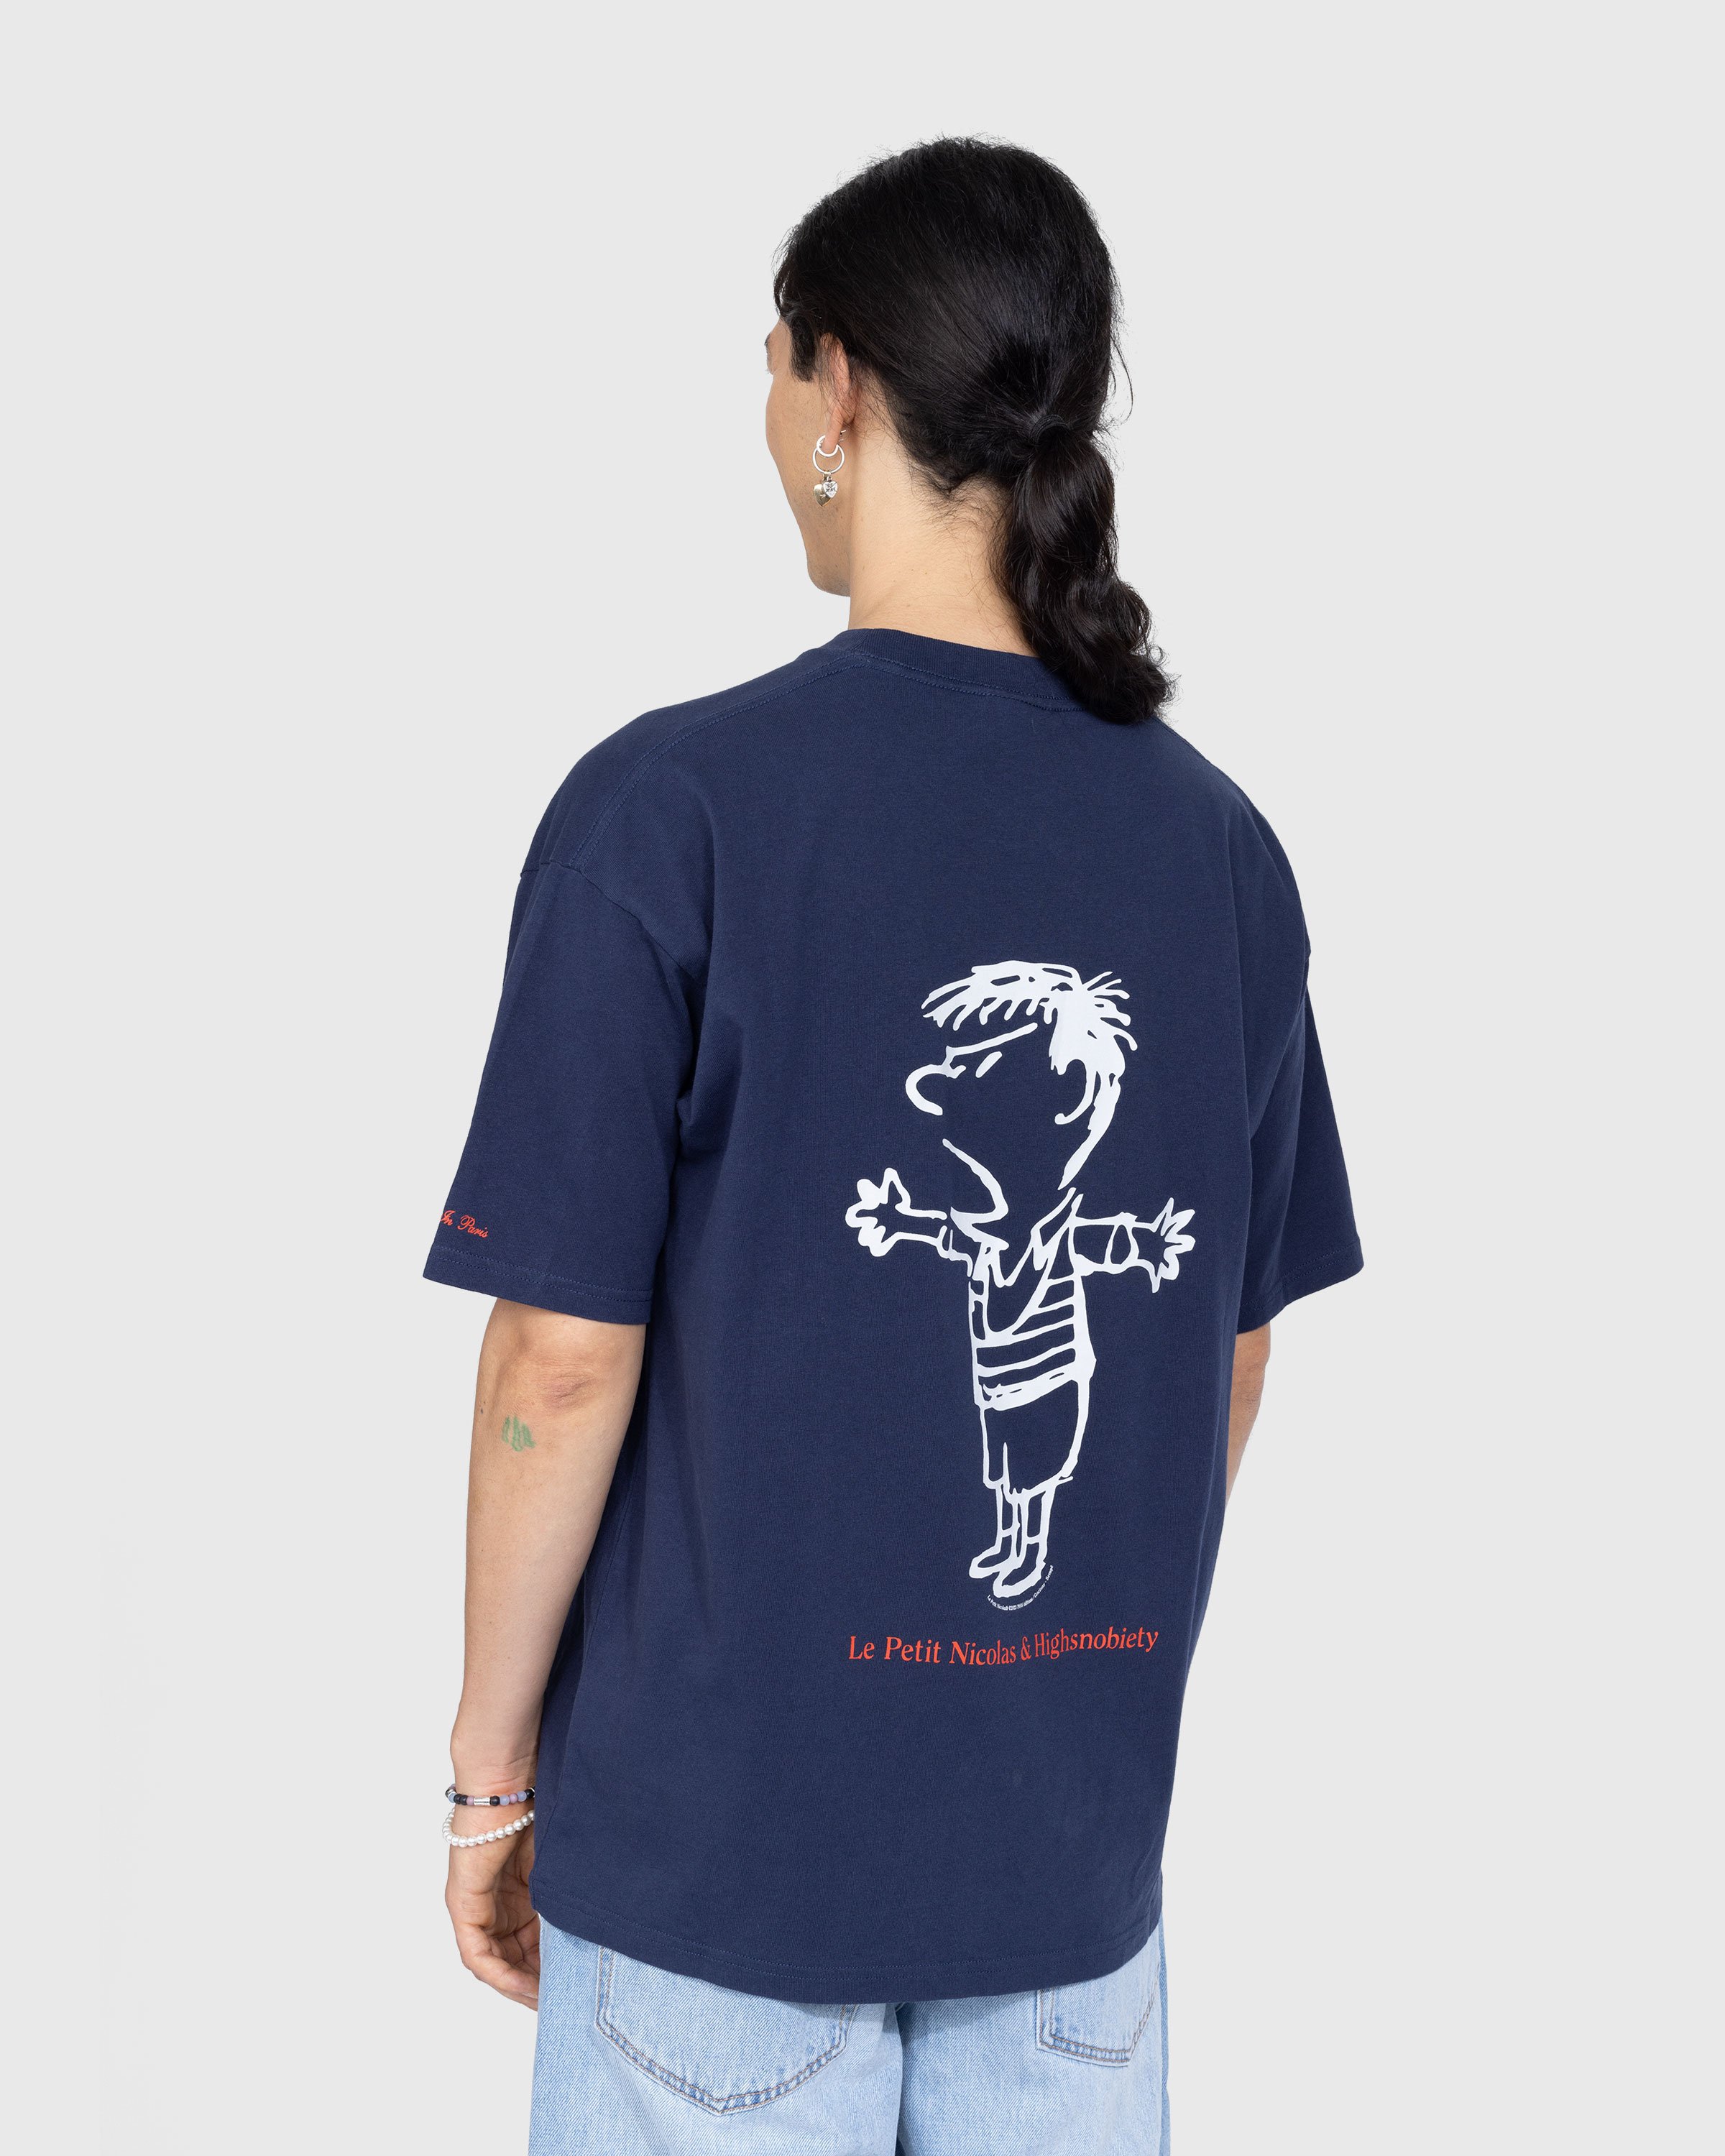 Le Petit Nicolas x Highsnobiety - T-Shirt Navy Blue - Clothing - Blue - Image 4